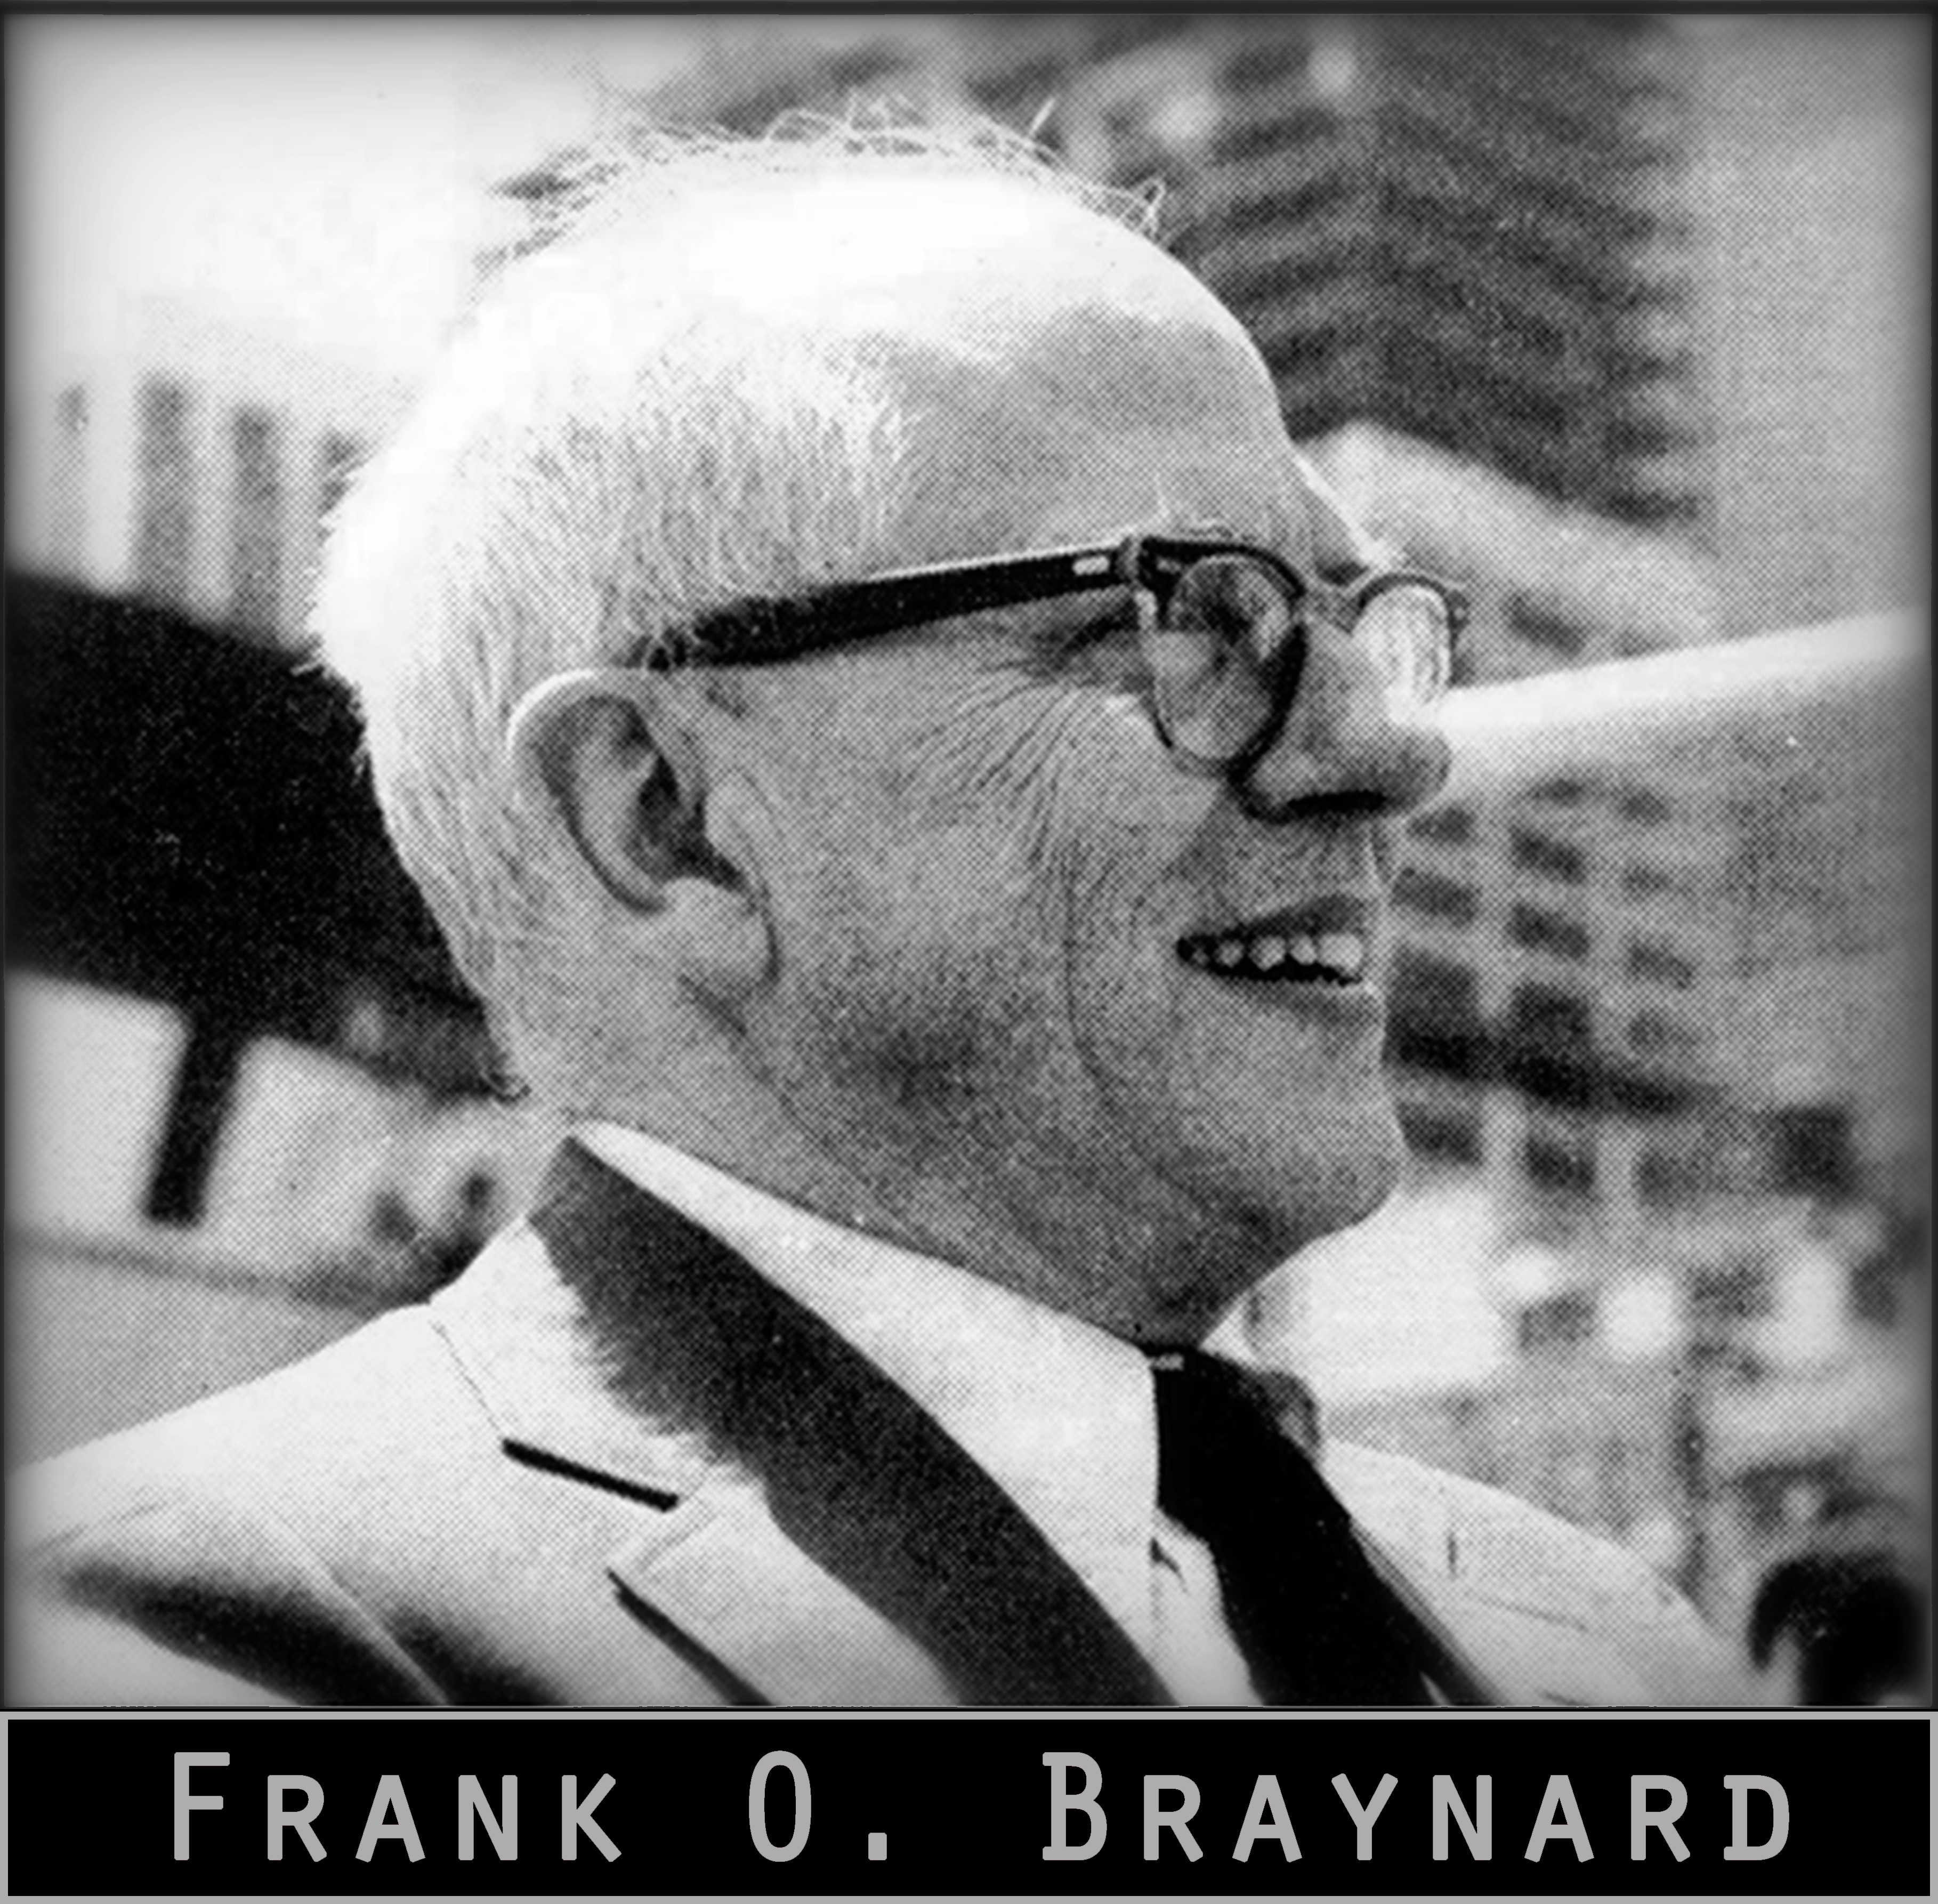 Frank O. Braynard